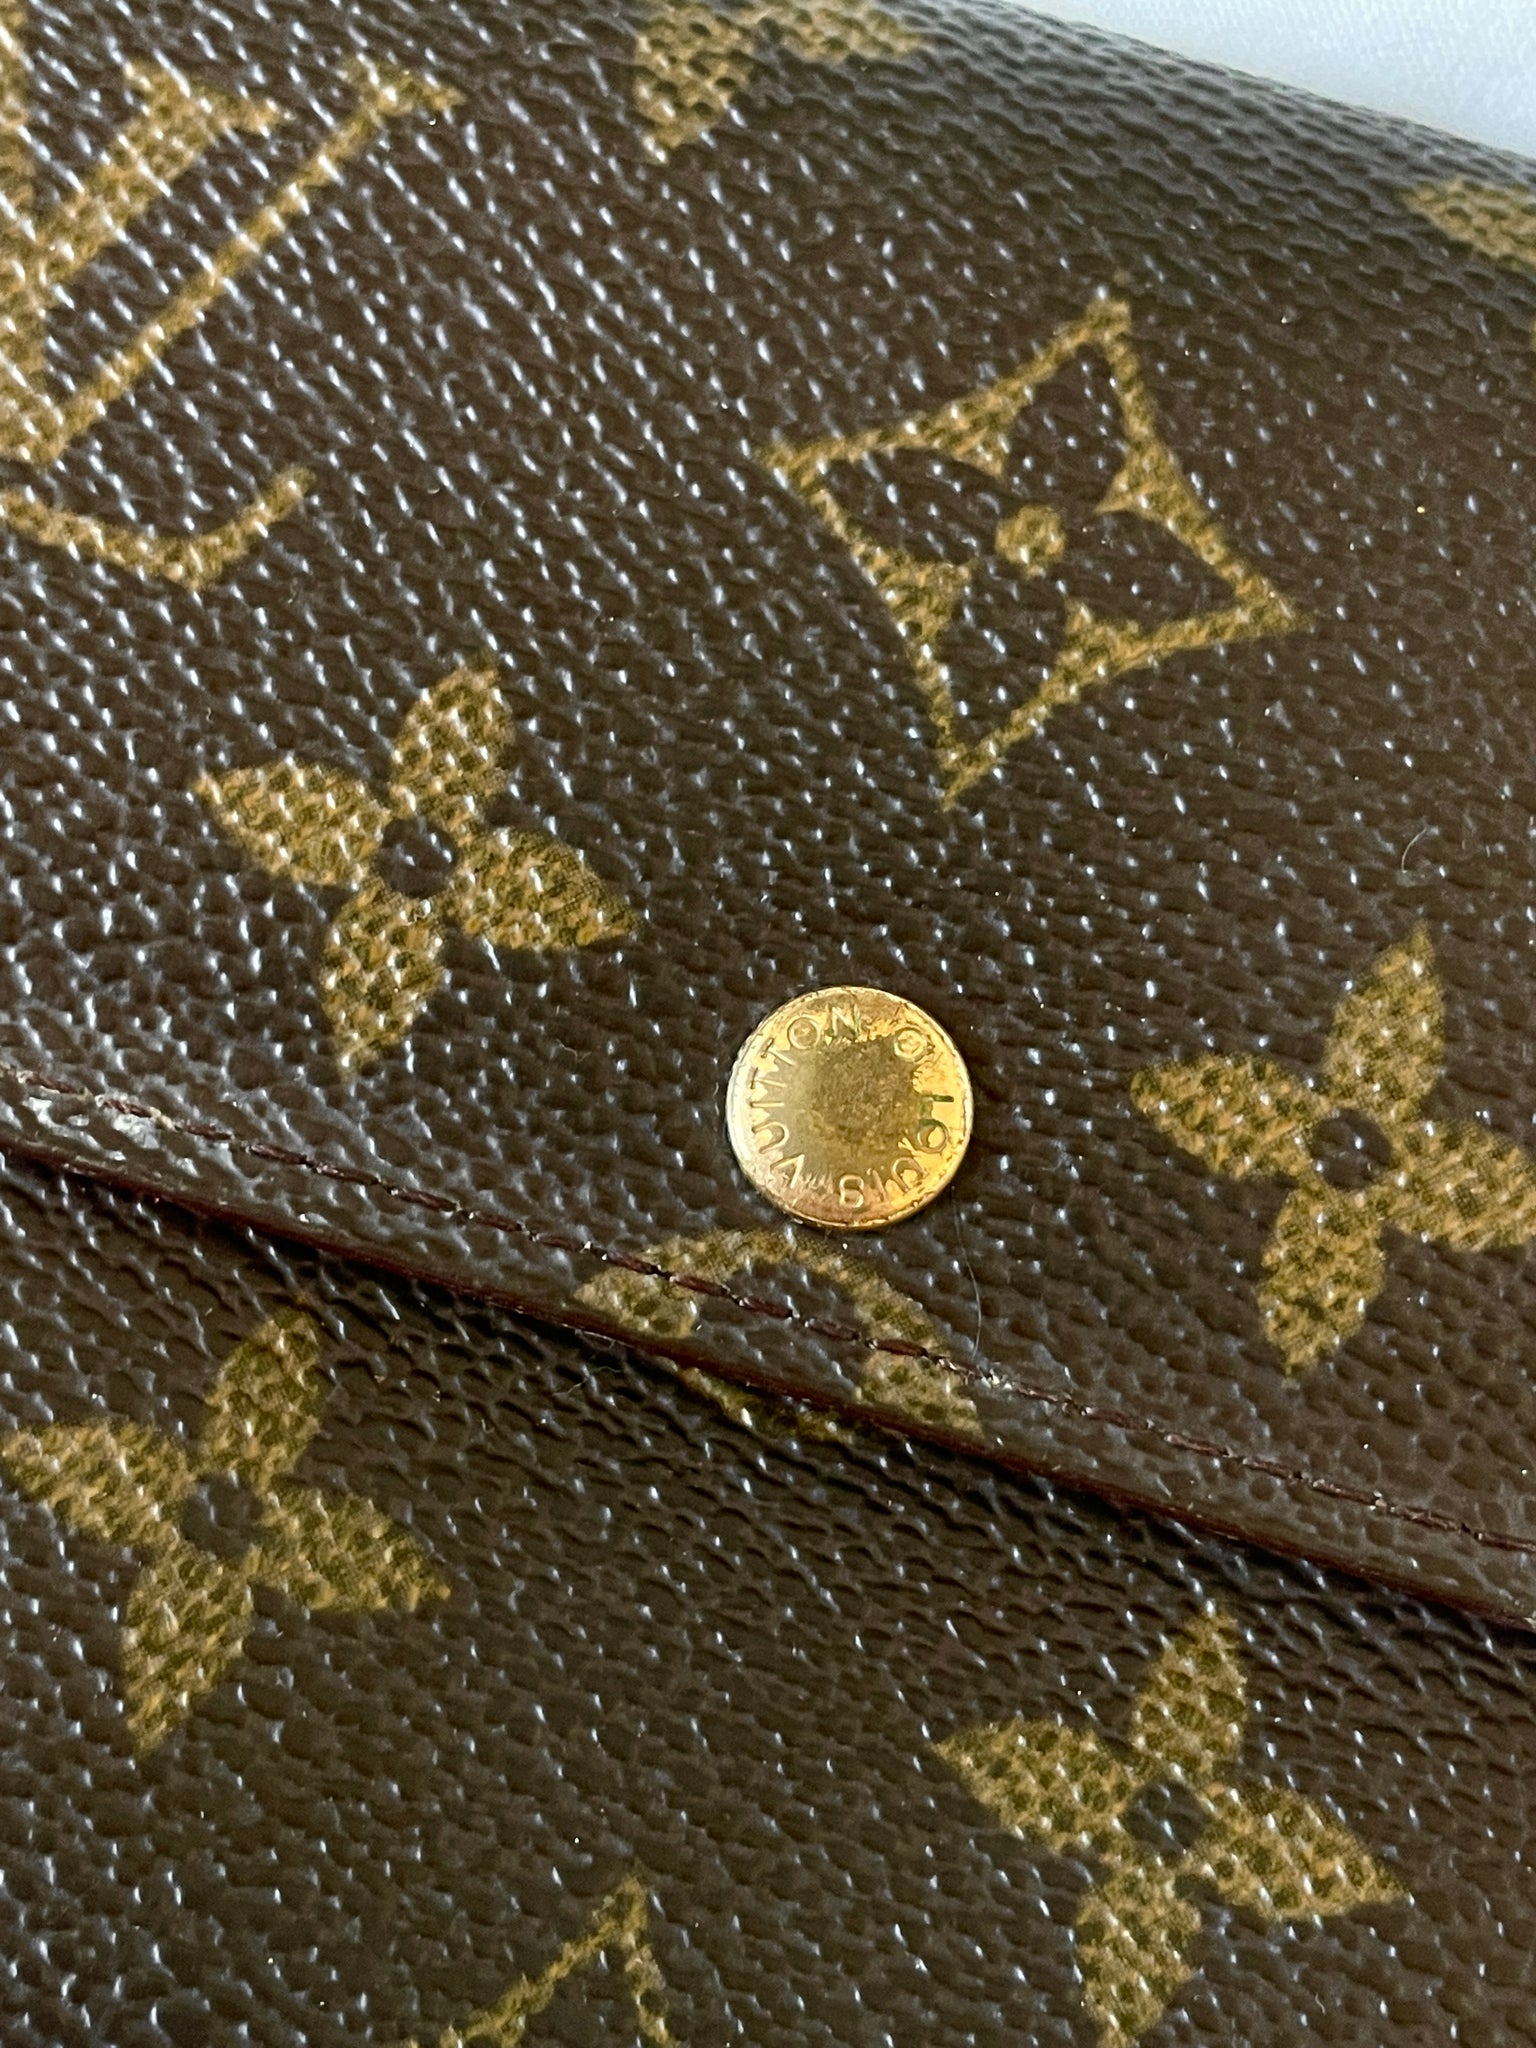 Louis Vuitton Wallet on Chain